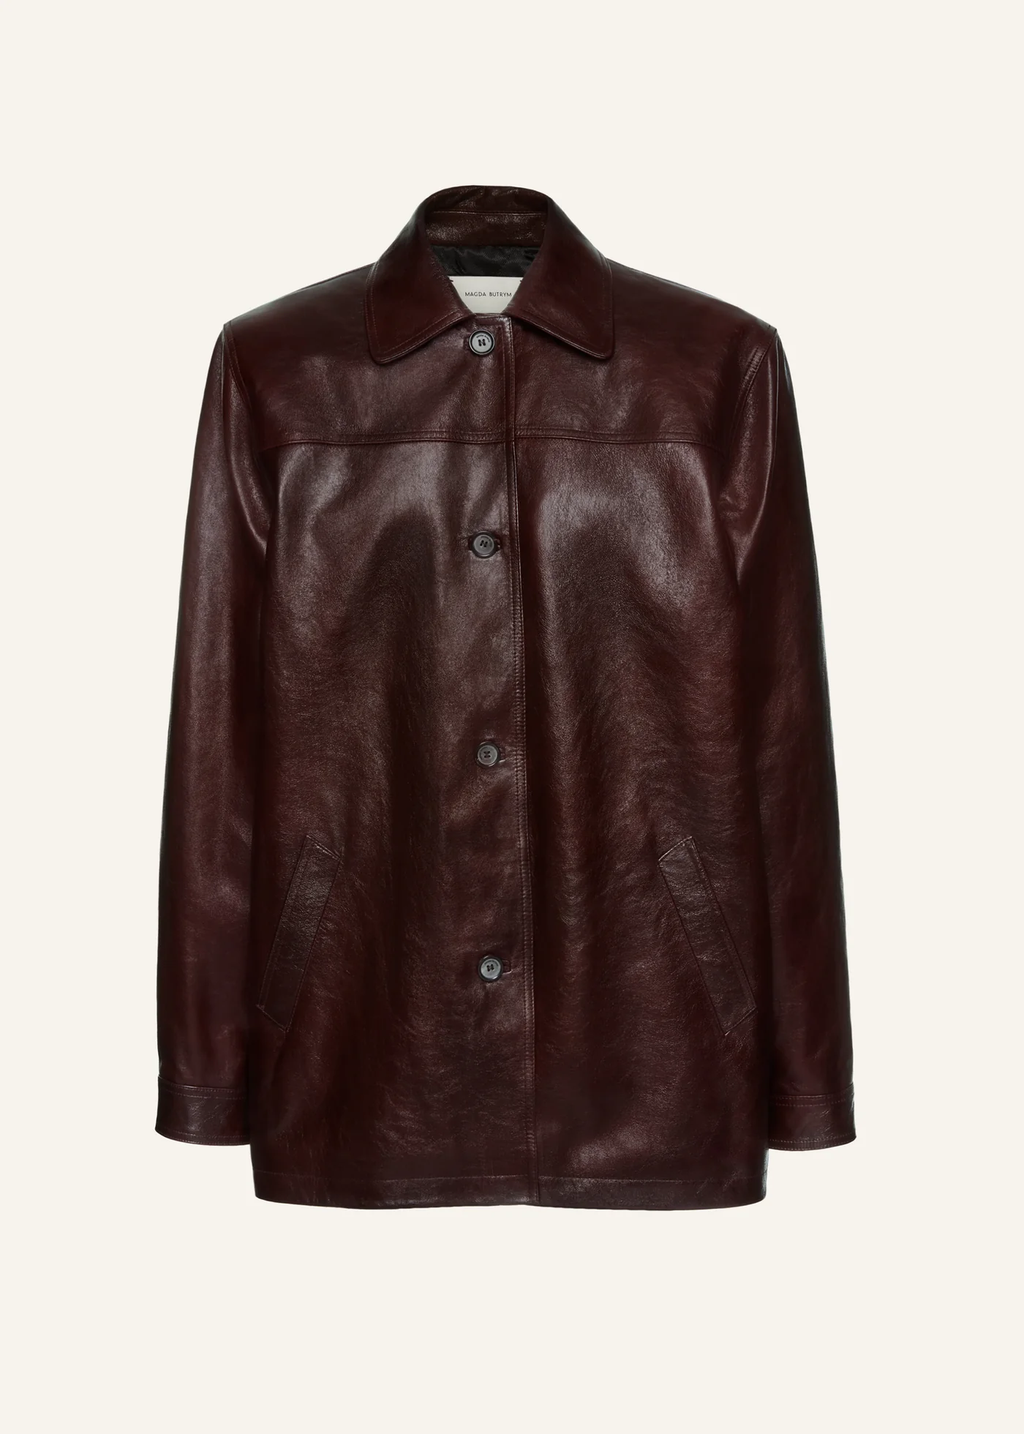 Oversized Leather Button Up Bordeaux Jacket